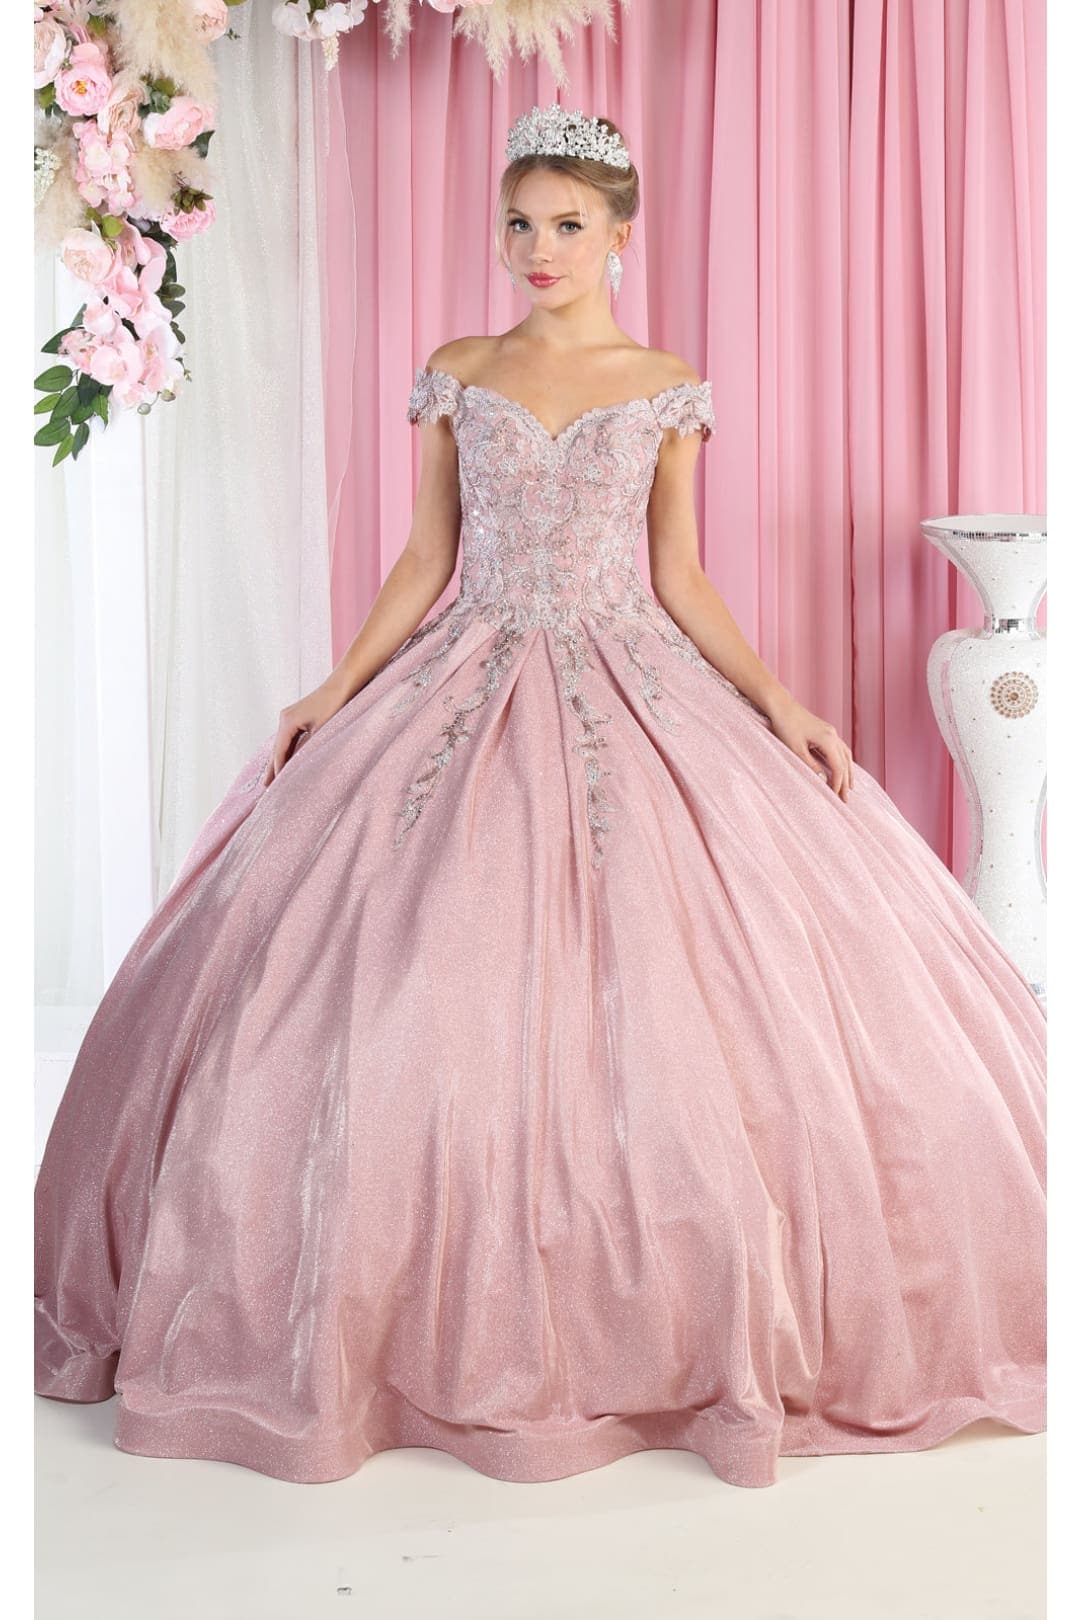 Glittery Quinceañera Ball Gown - DUSTY ROSE / 4